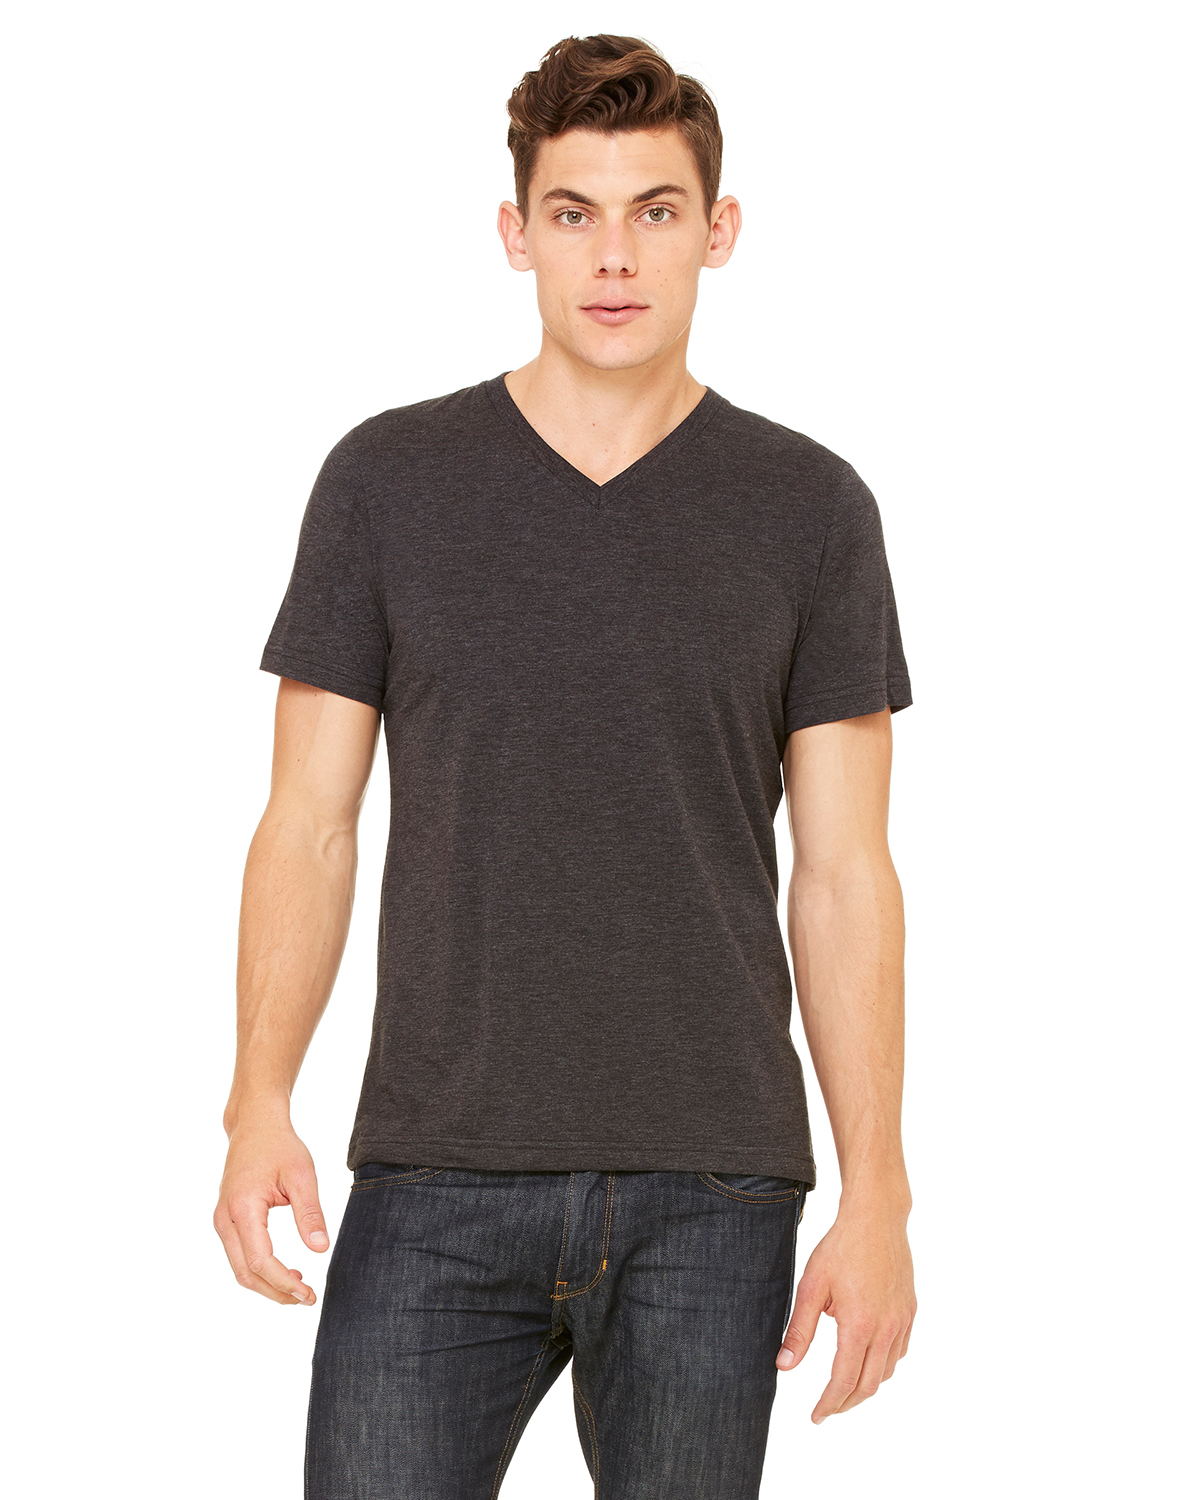 Bella 3415C - Unisex Triblend Short-Sleeve V-Neck T-Shirt $6.63 - Men's ...